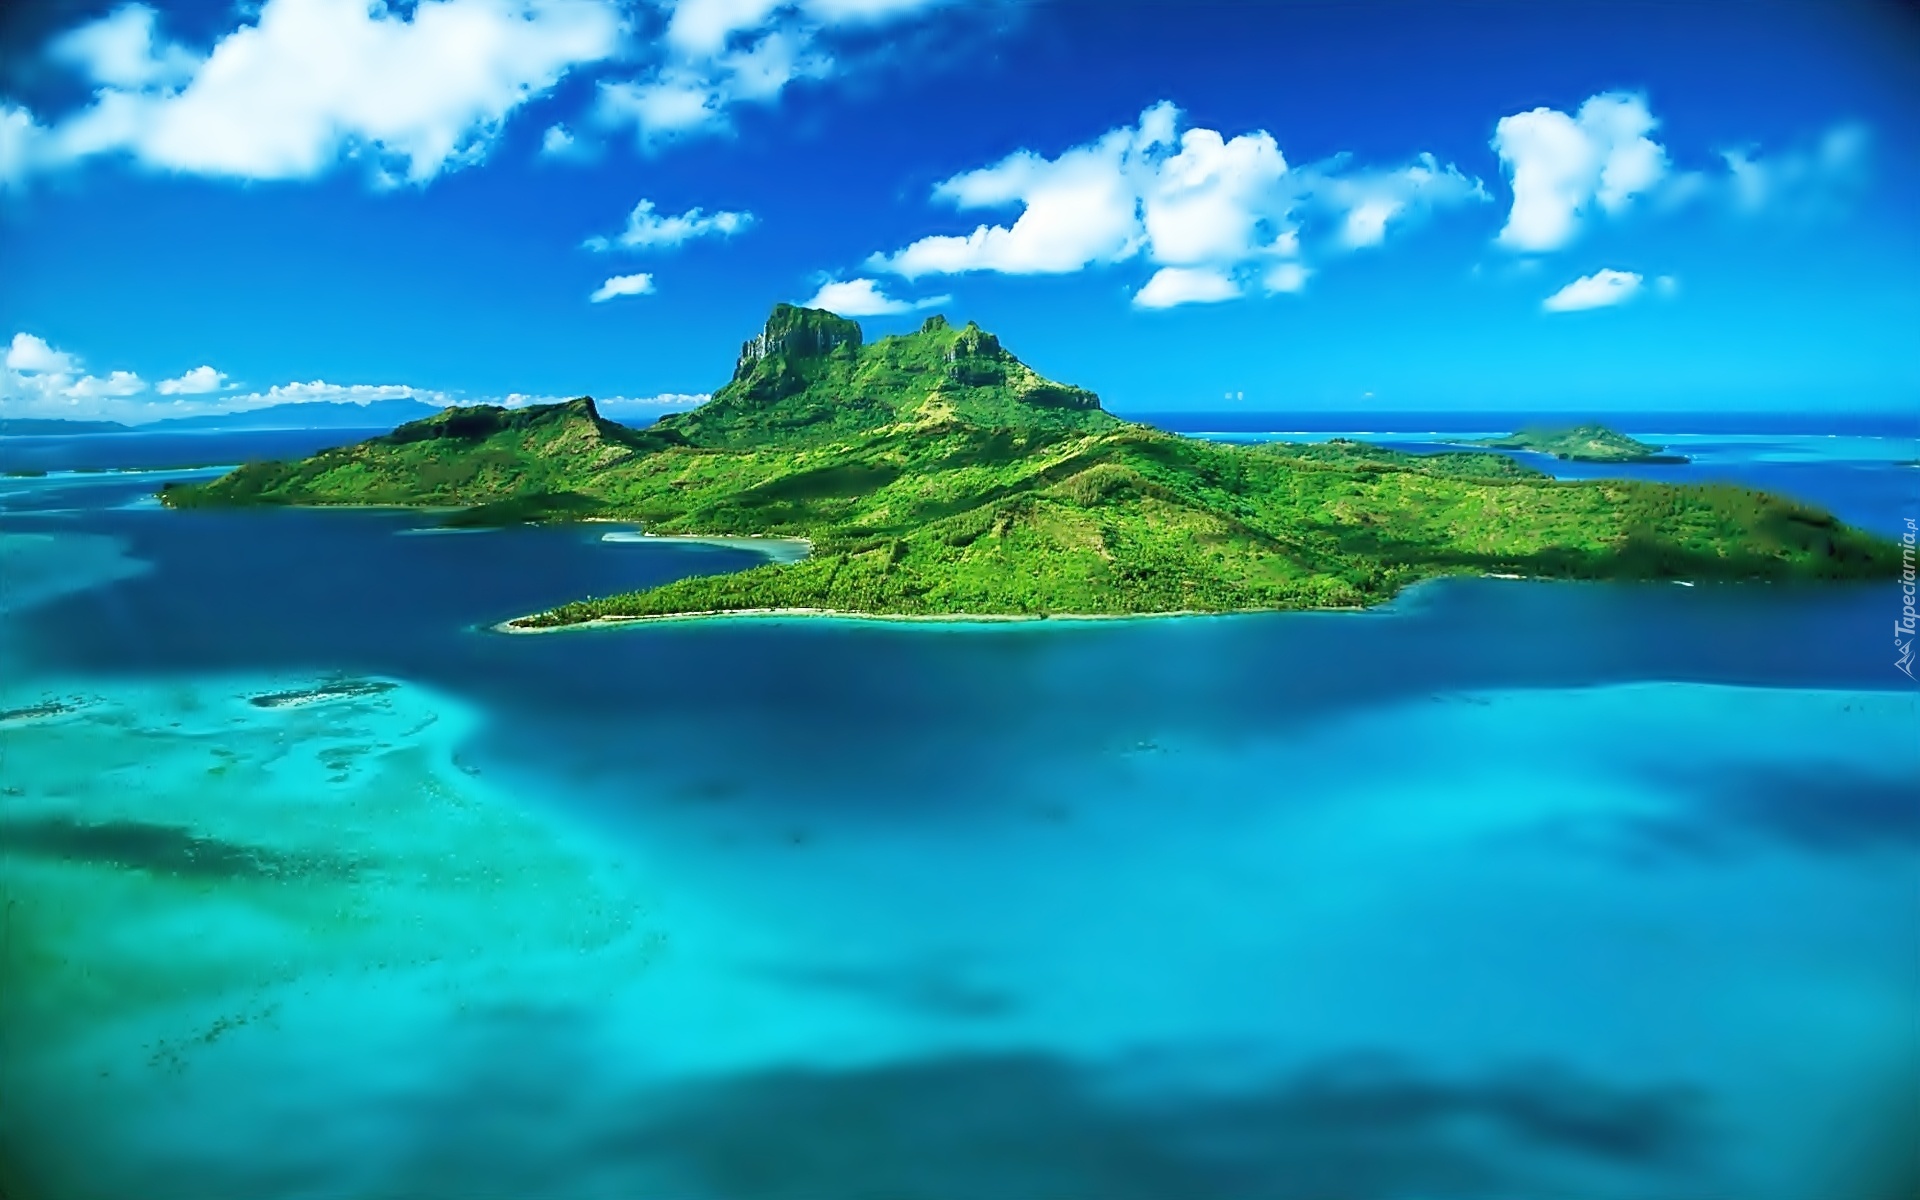 Polinezja Francuska, Bora Bora, Morze, Wyspa